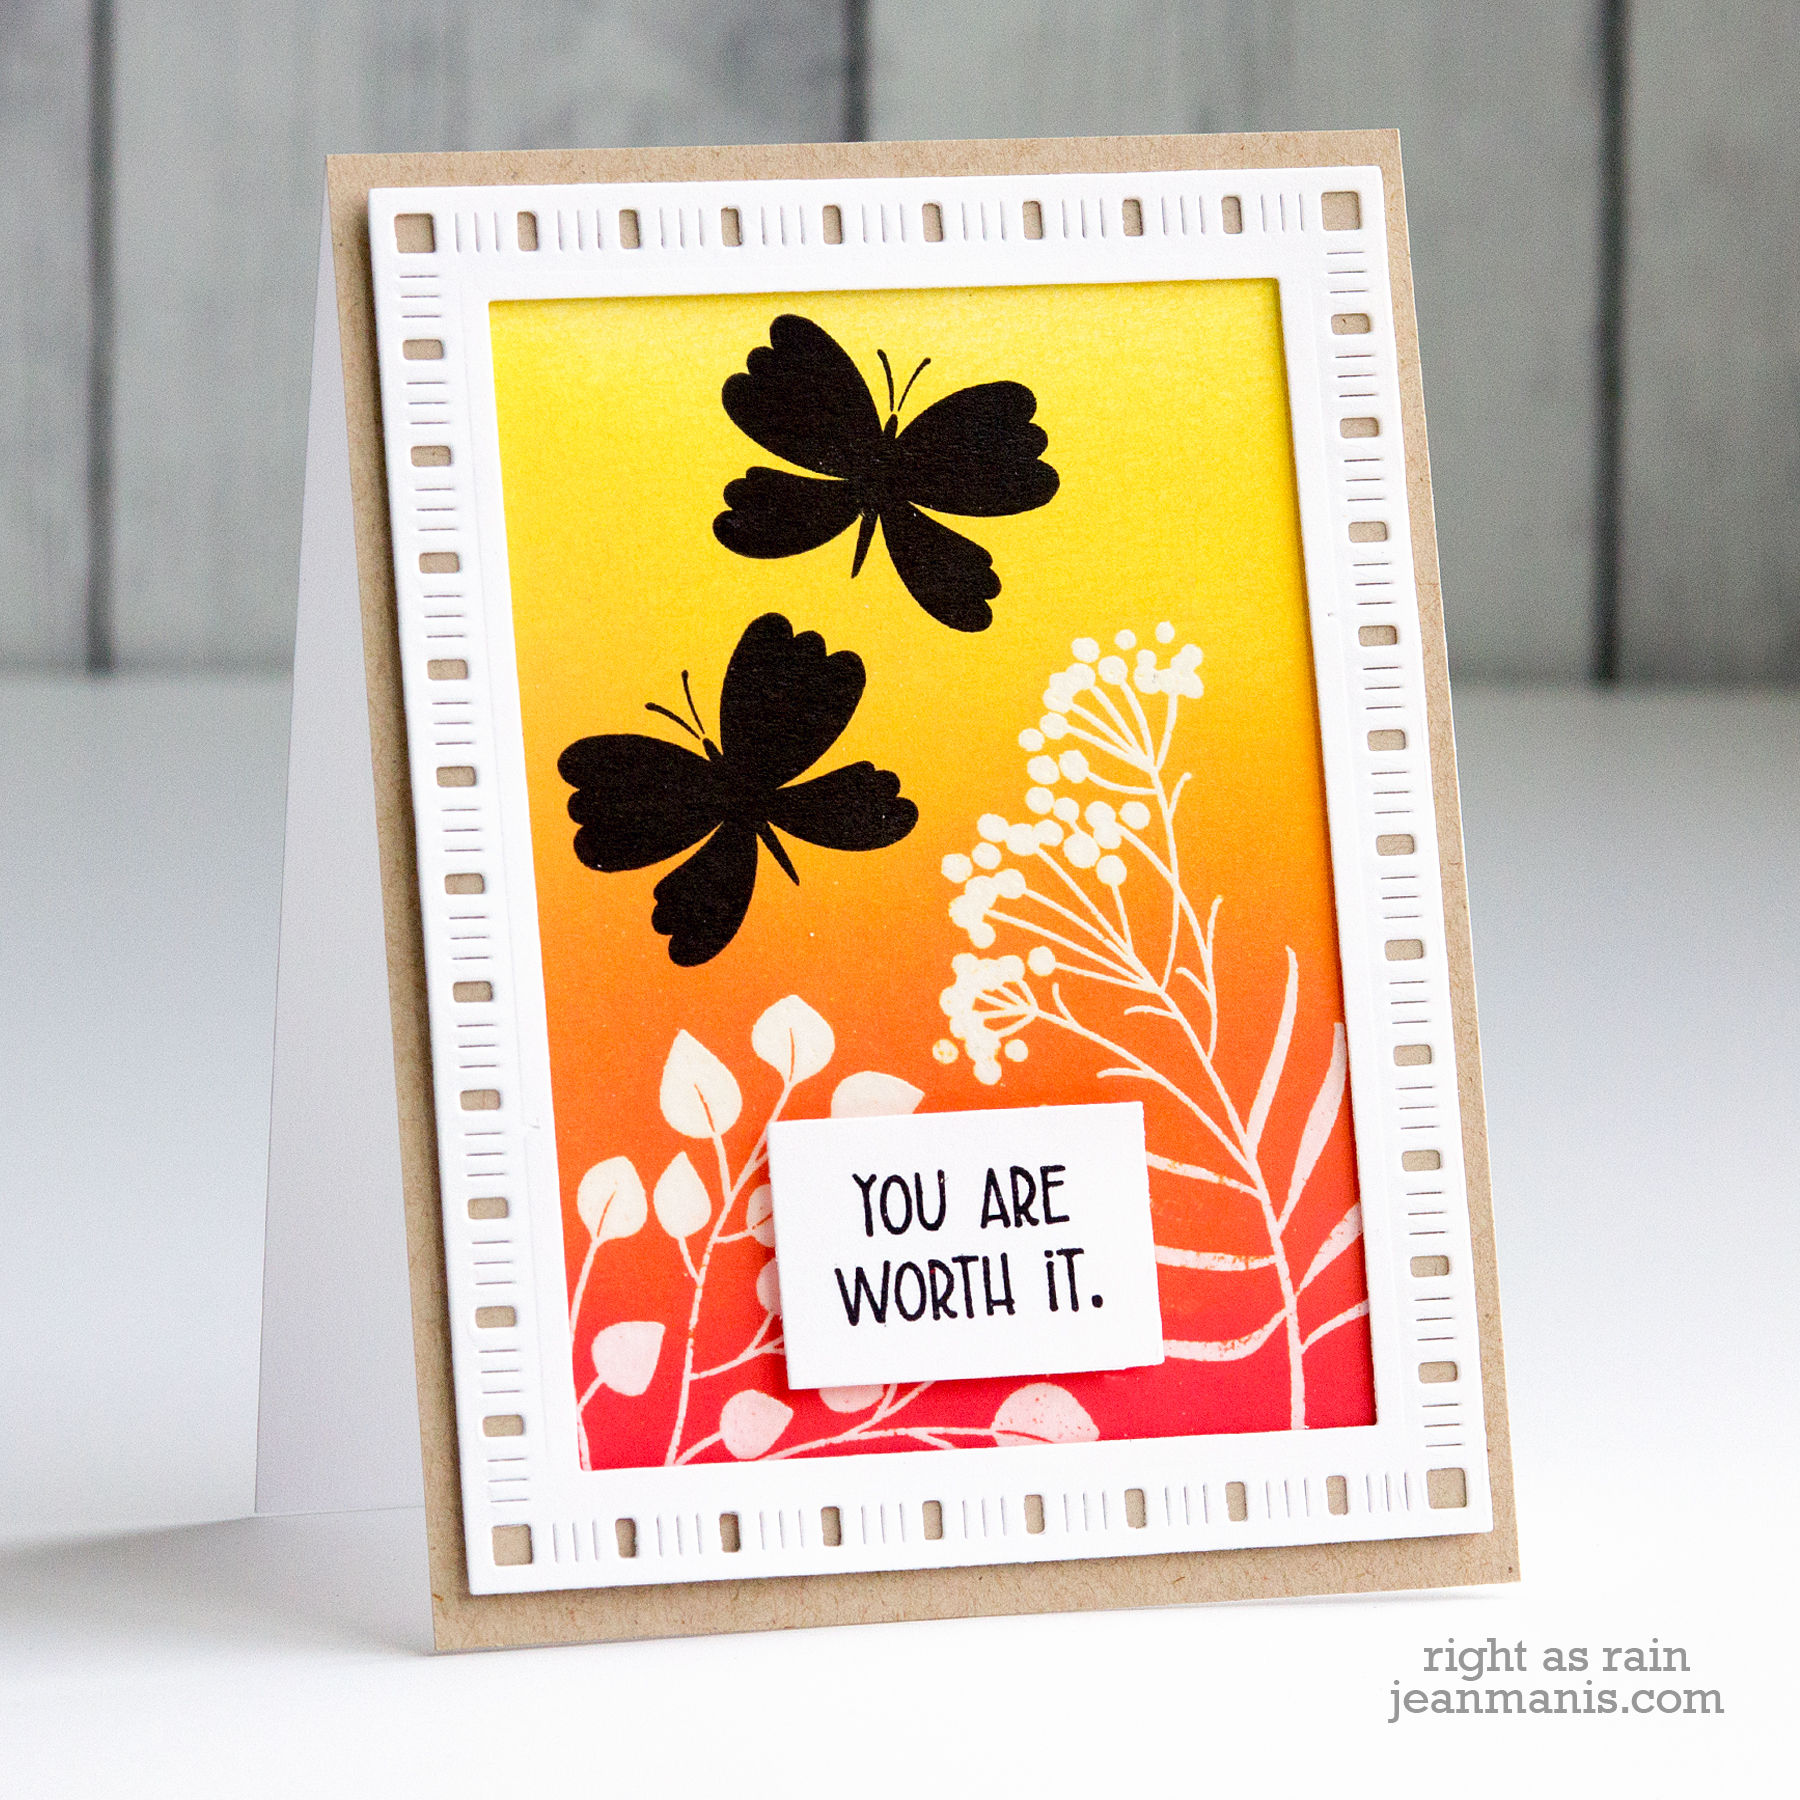 Handmade Cards for Encouragement